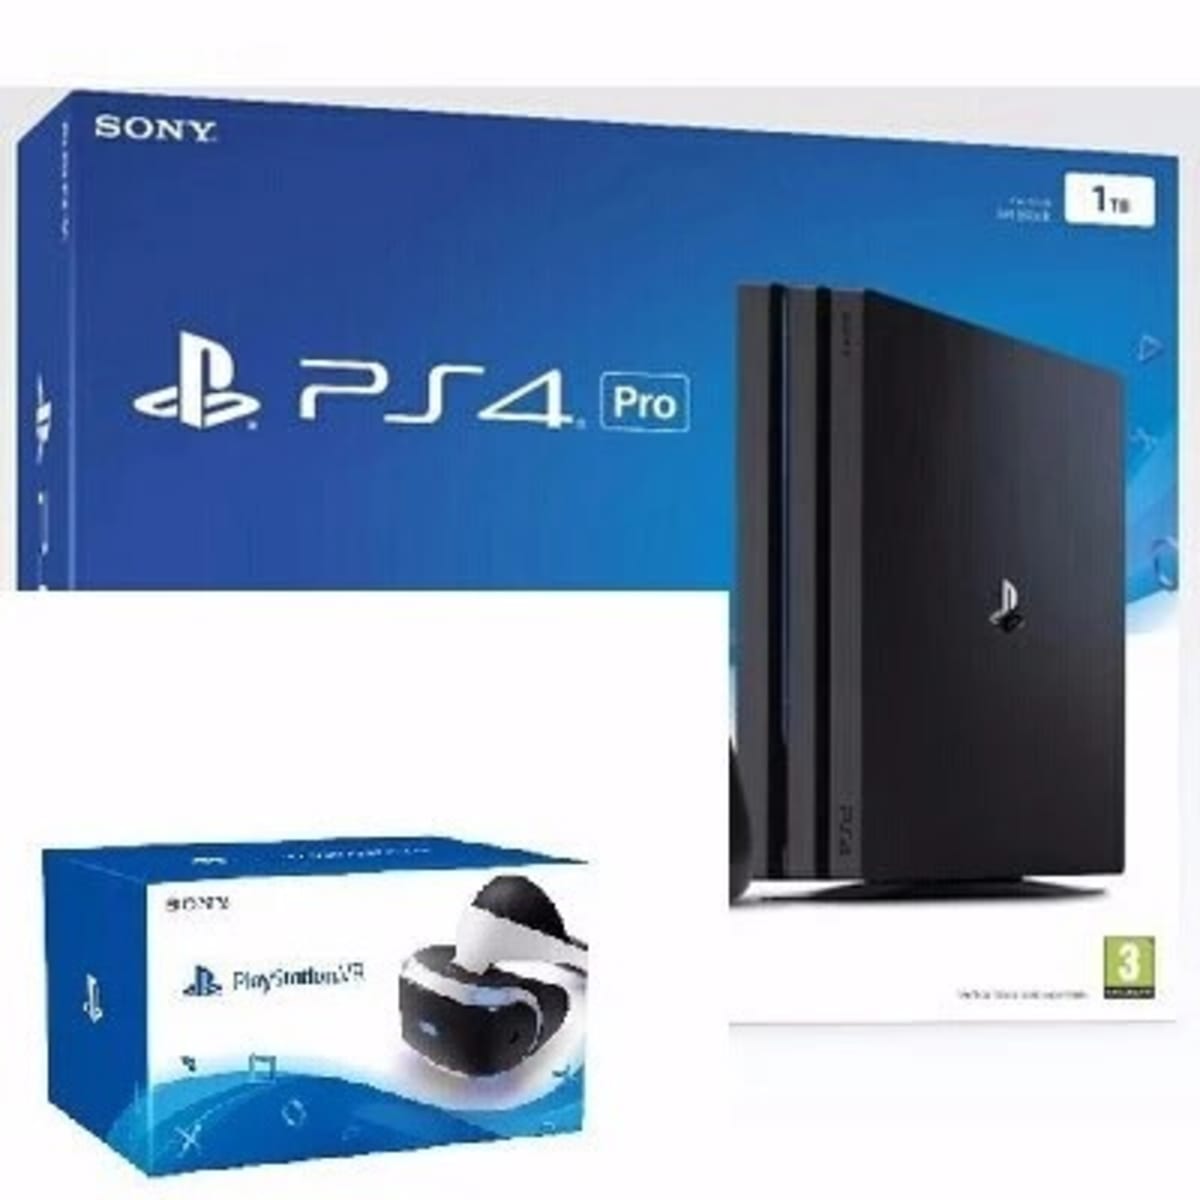 Ps4 Pro - 1 TB Playstation Vr Bundle | Konga Online Shopping